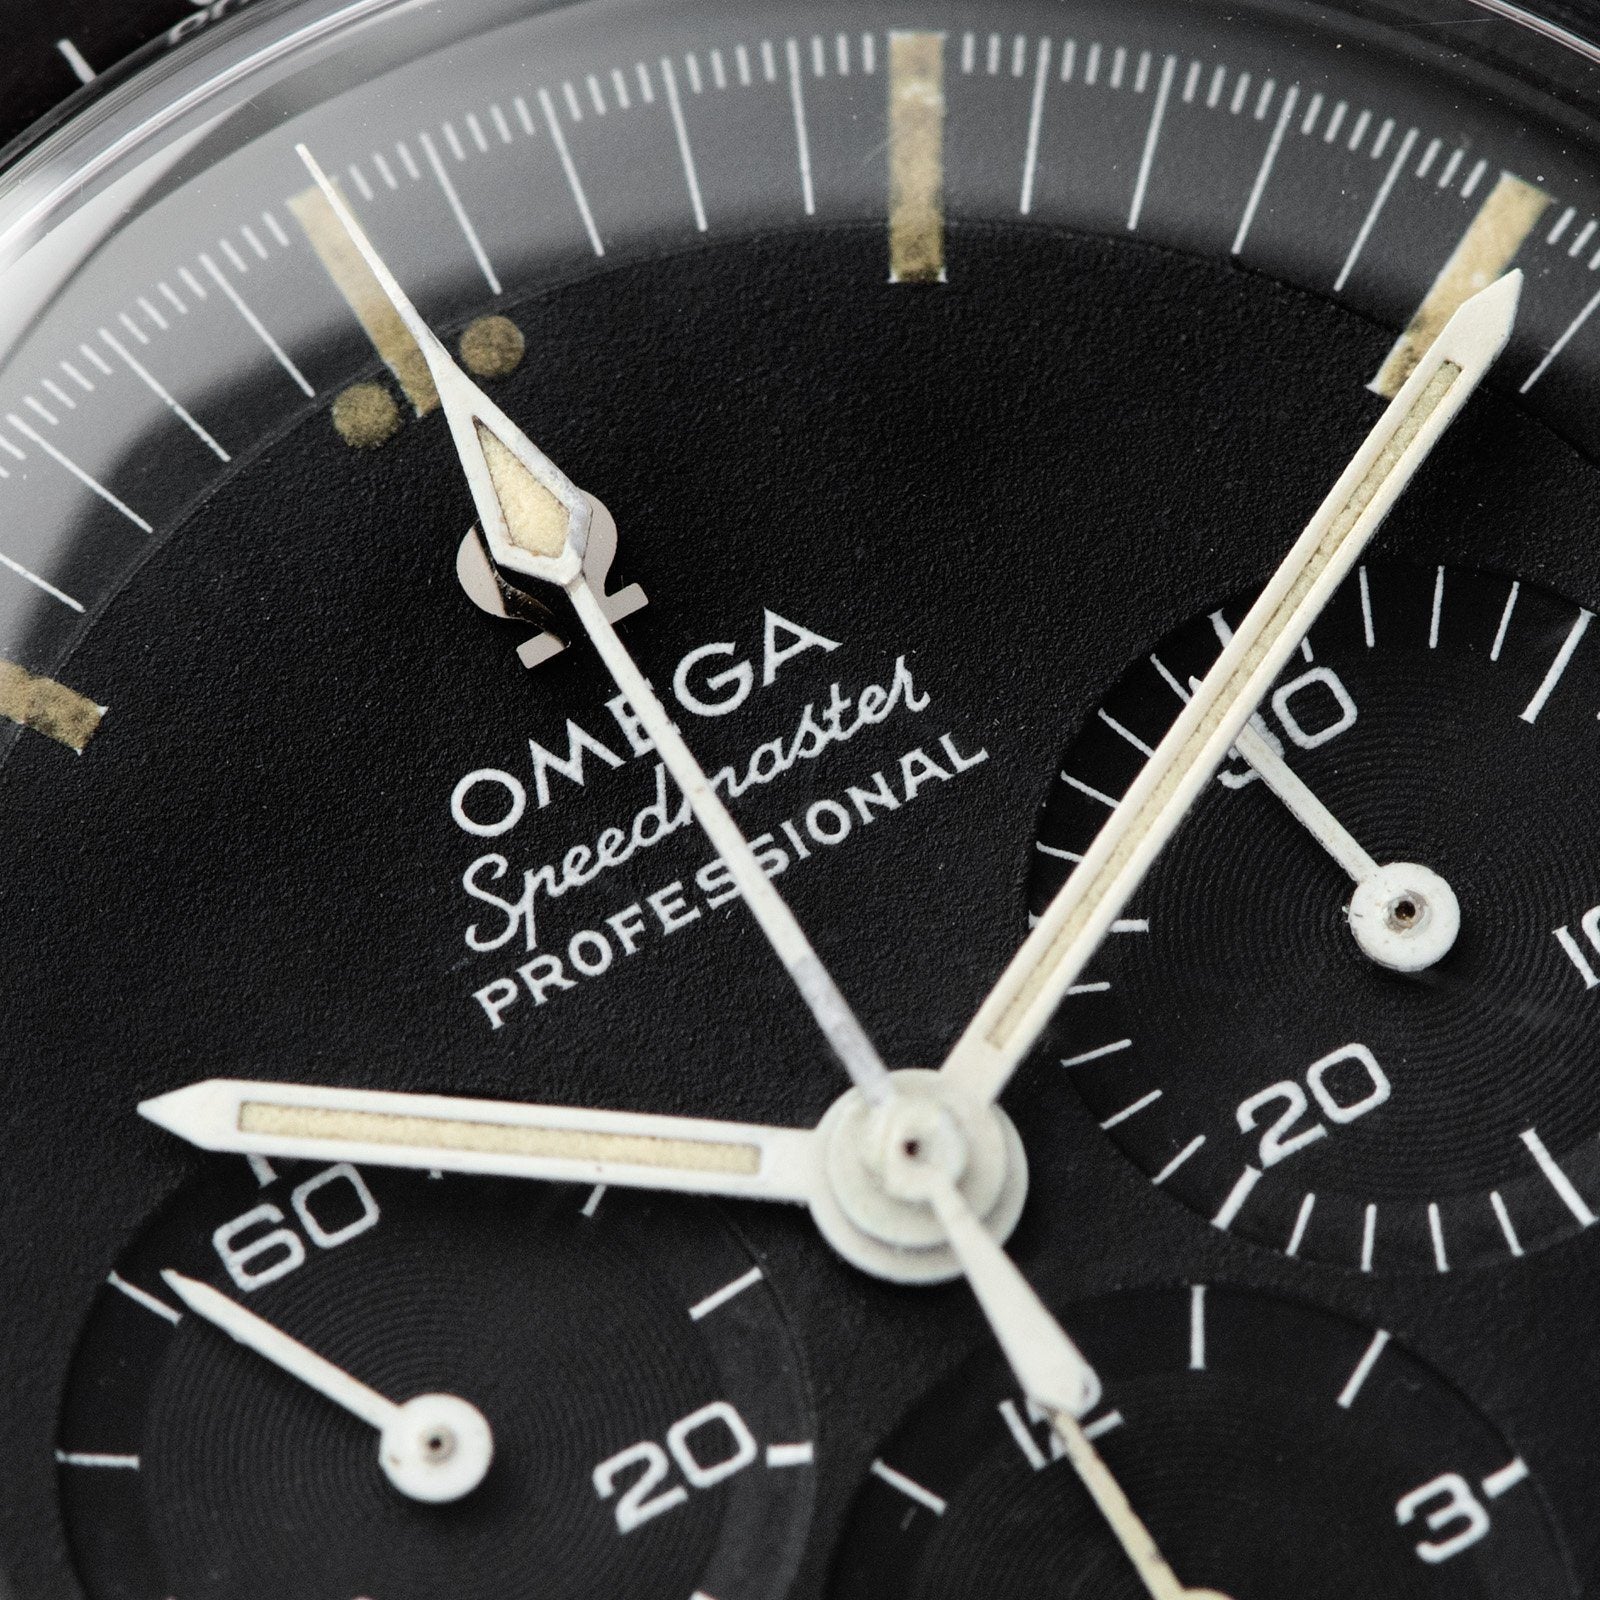 Omega Speedmaster Reference 105.012-66